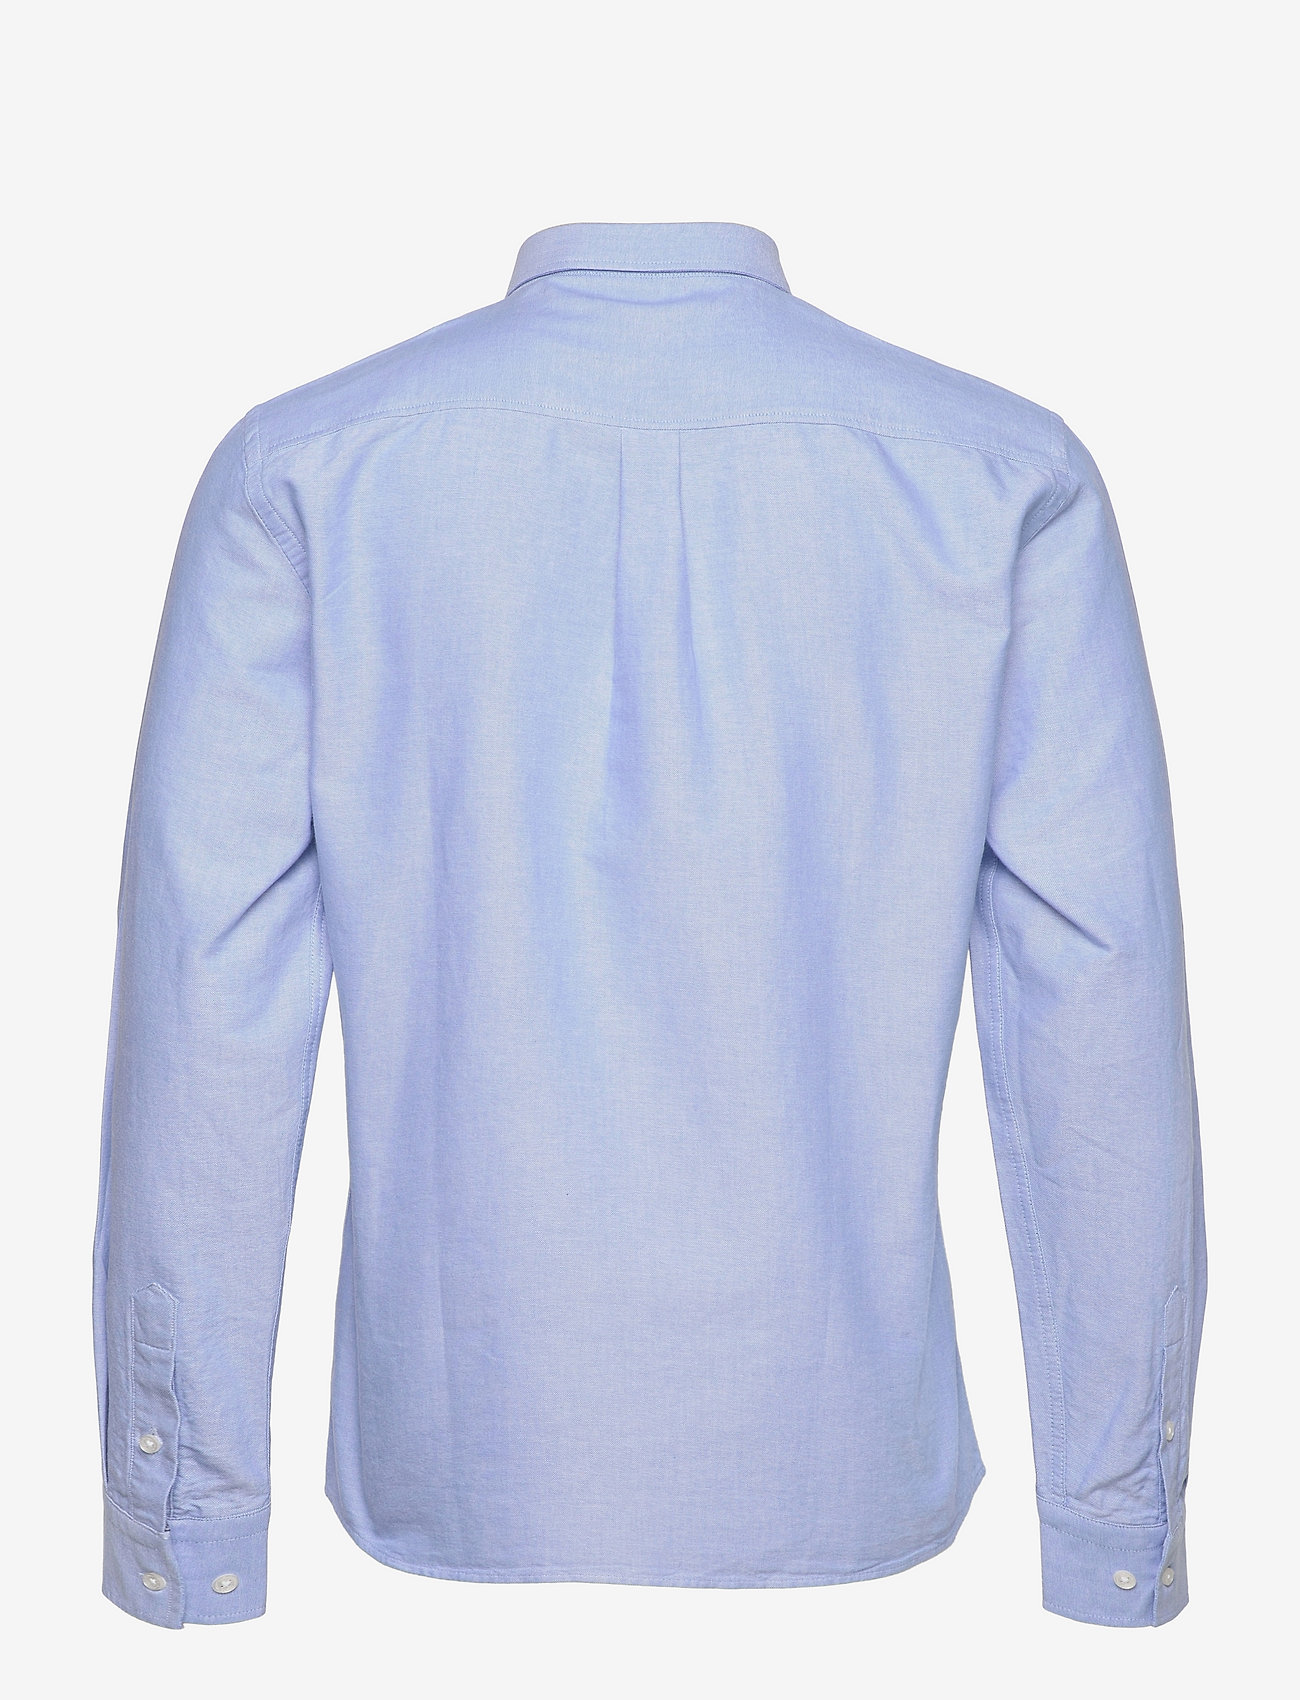 Armor Lux - Oxford shirt - oxford shirts - light blue - 1